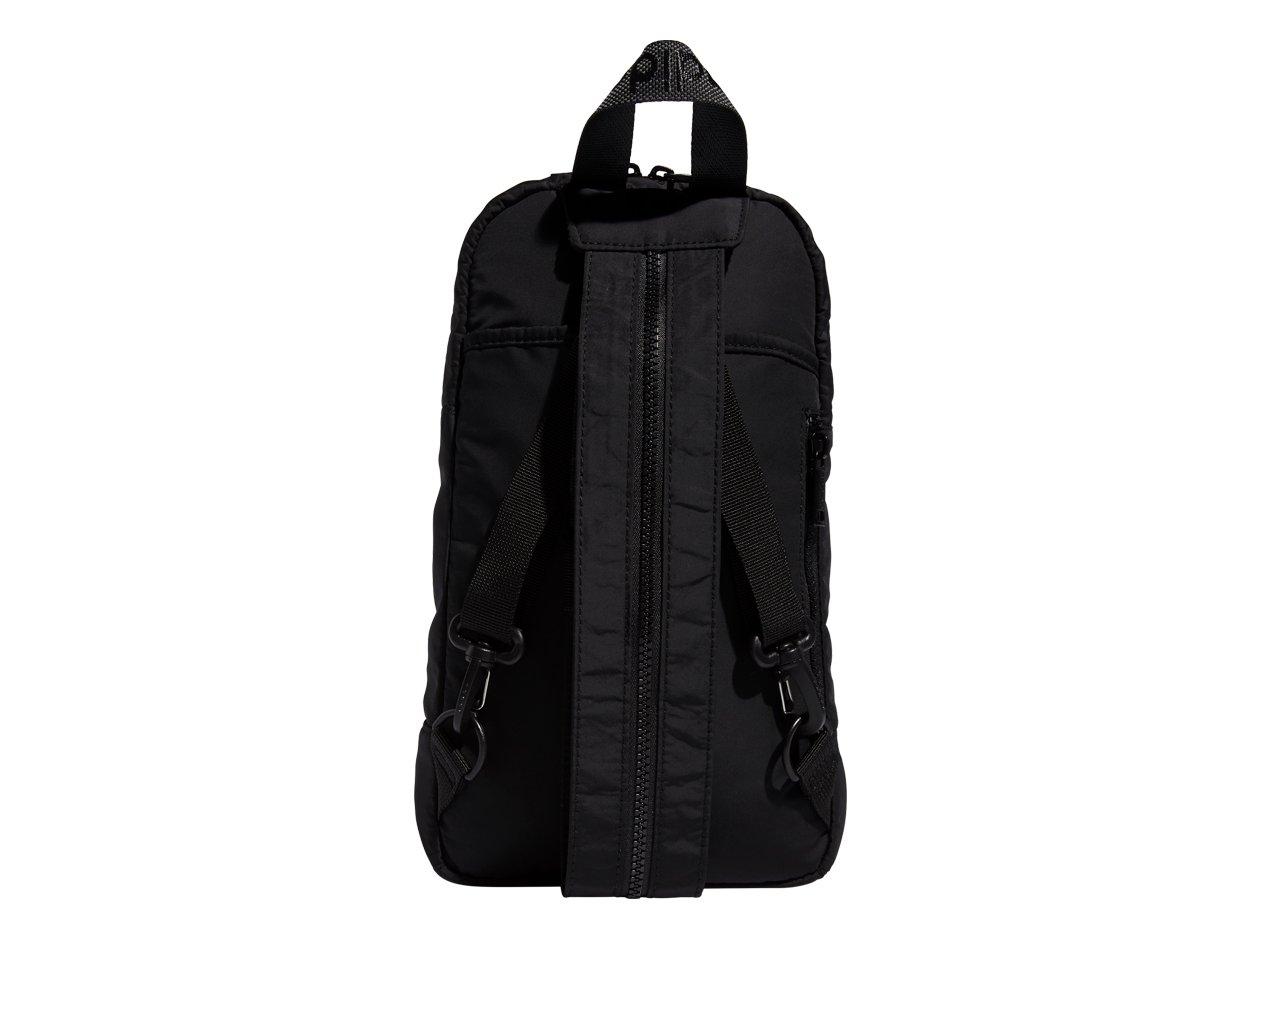 Adidas Essentials Convertible Bag |